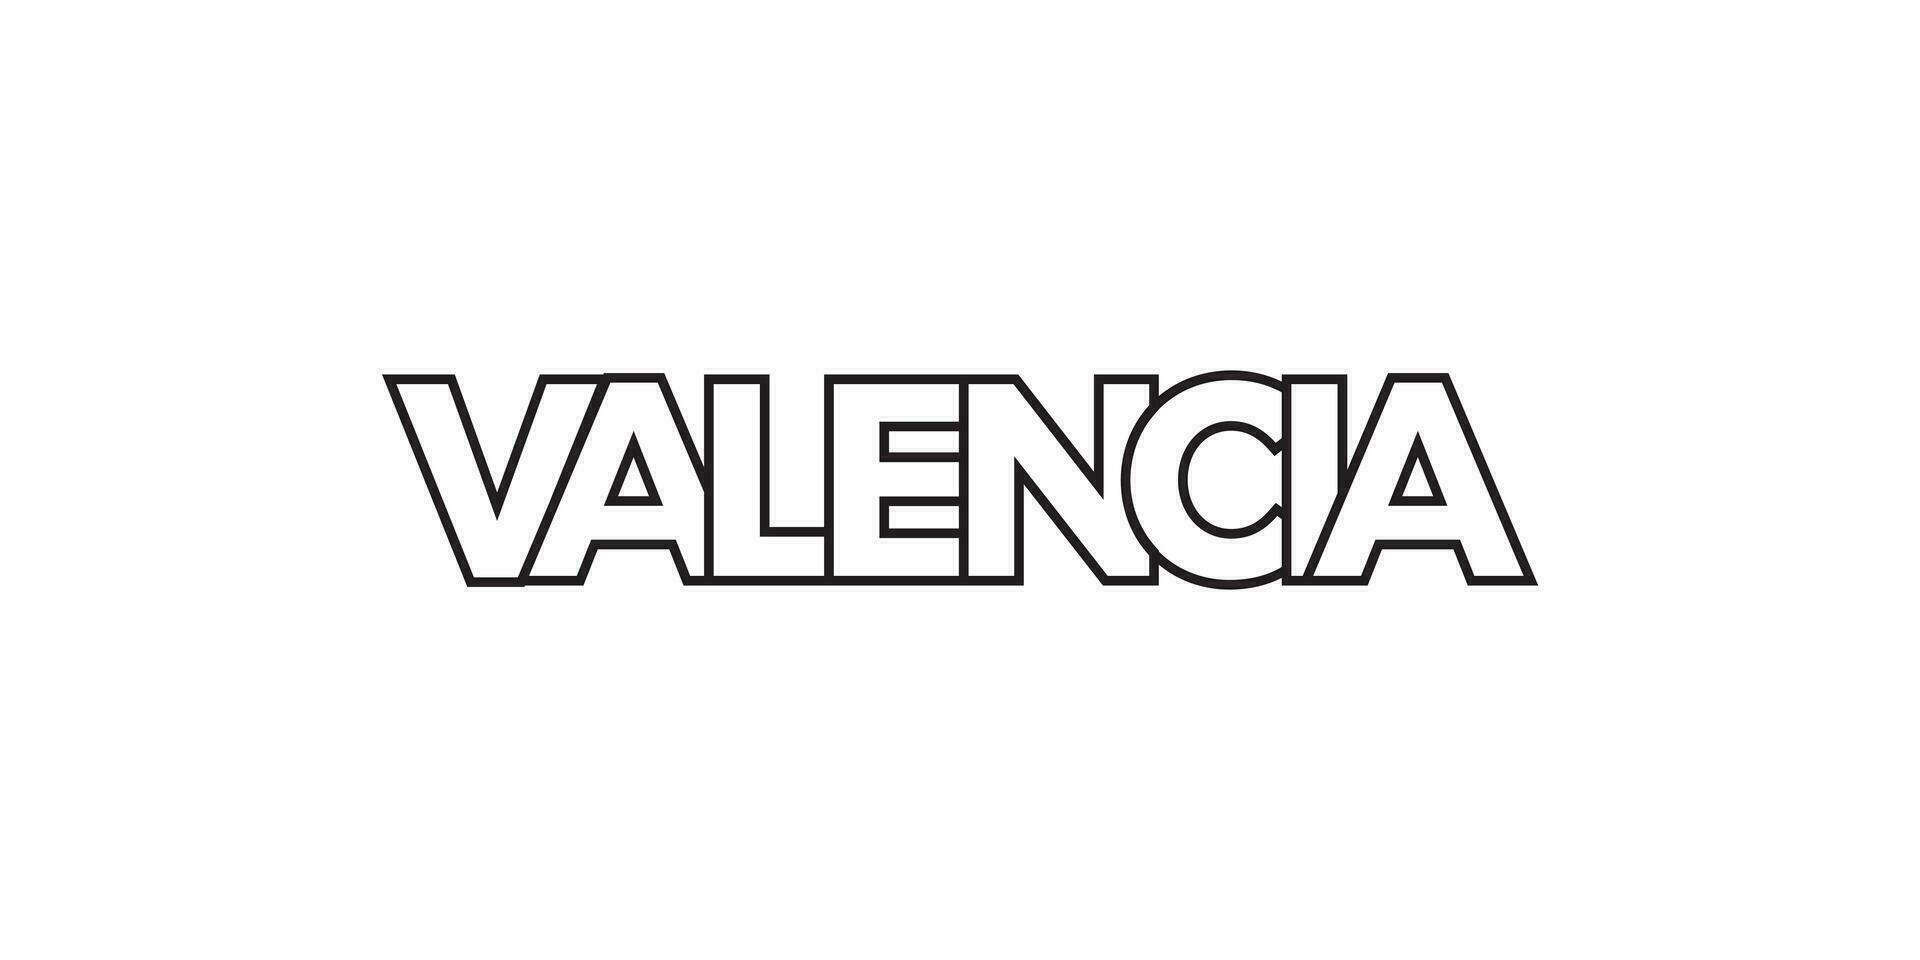 valencia i de Spanien emblem. de design funktioner en geometrisk stil, vektor illustration med djärv typografi i en modern font. de grafisk slogan text.